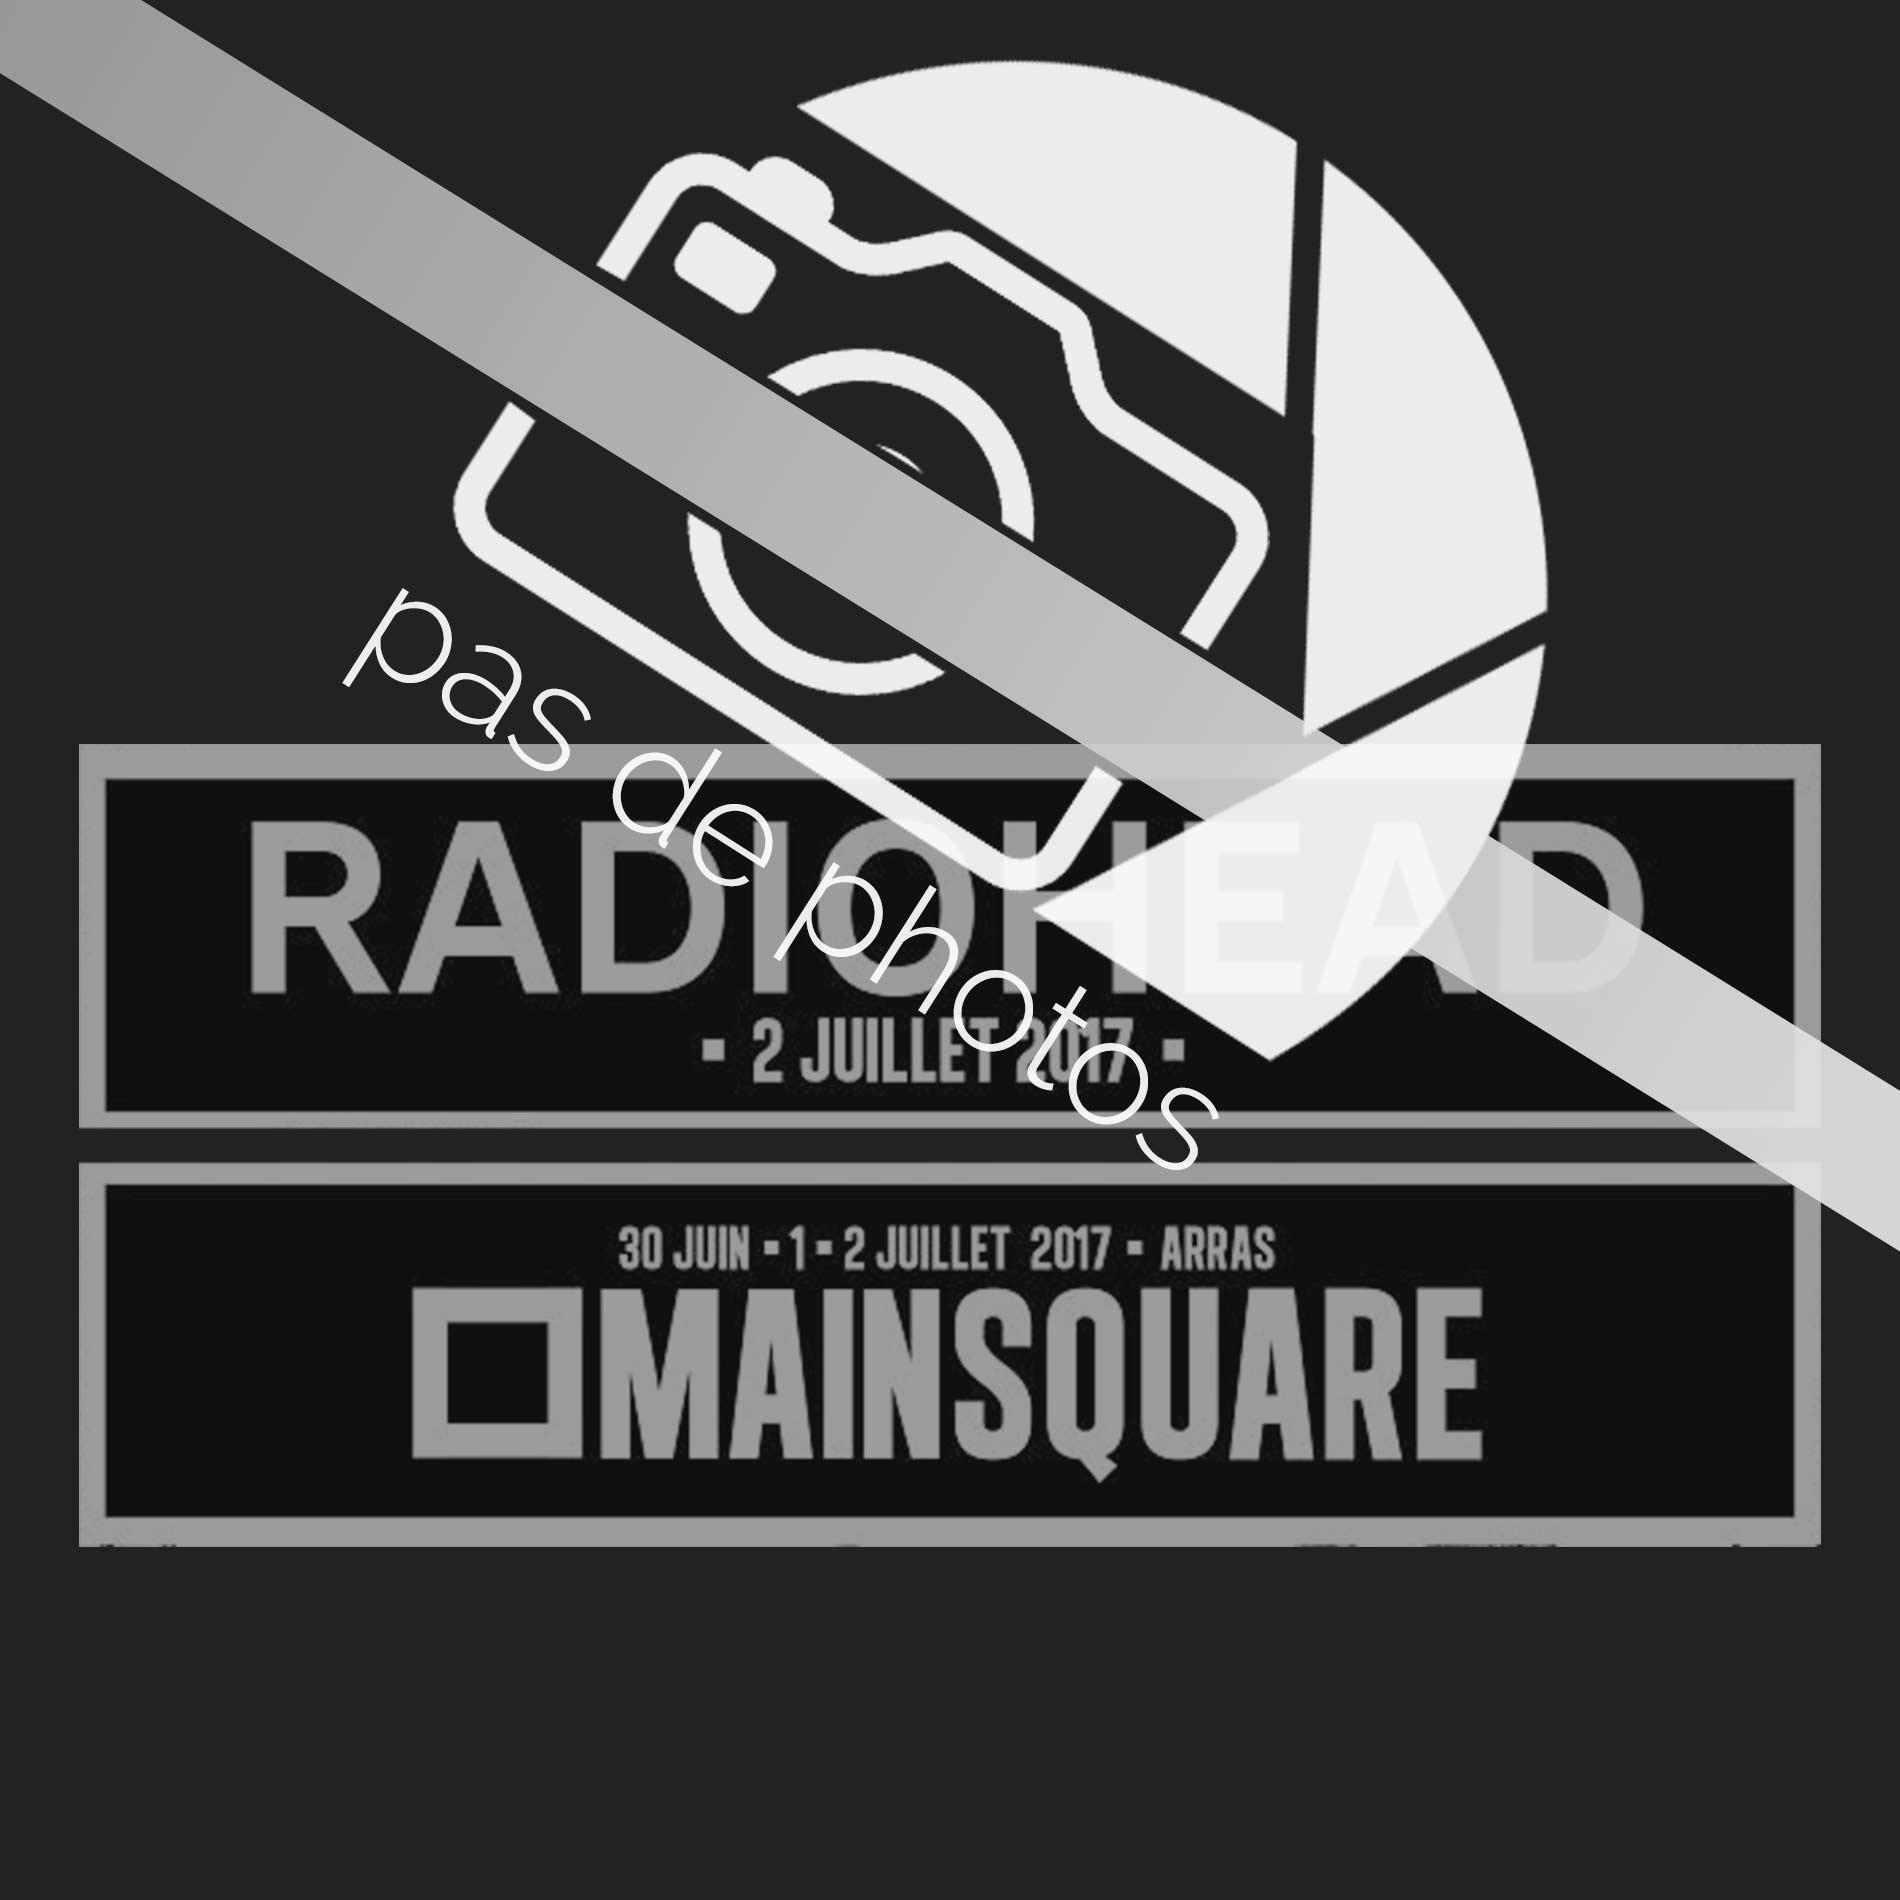 Radiohead Main Square 2017